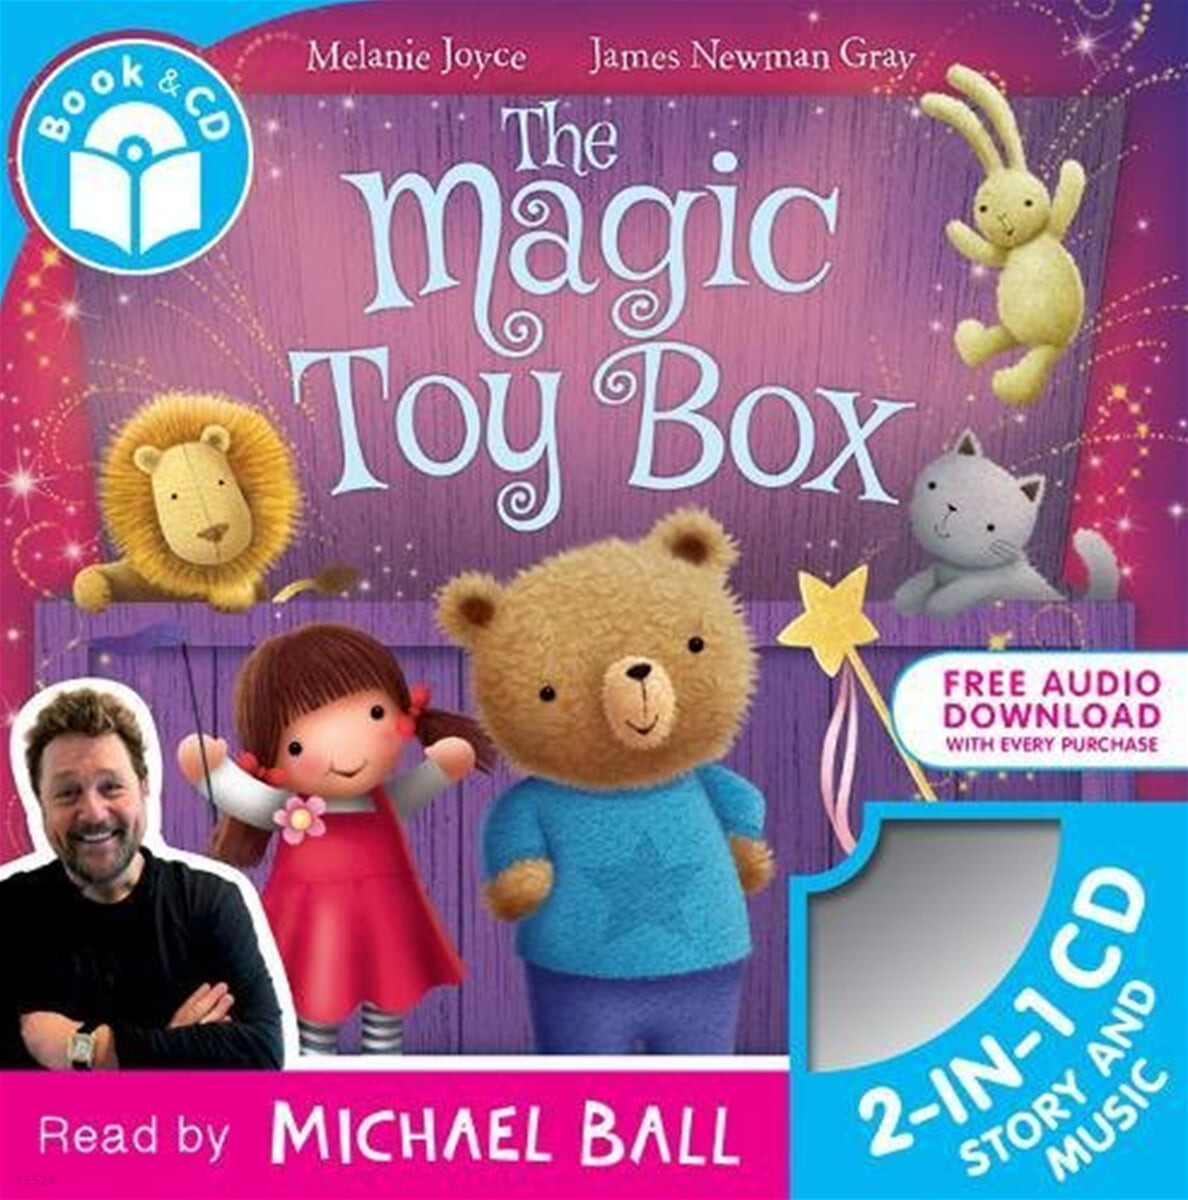 (The) magic toy box